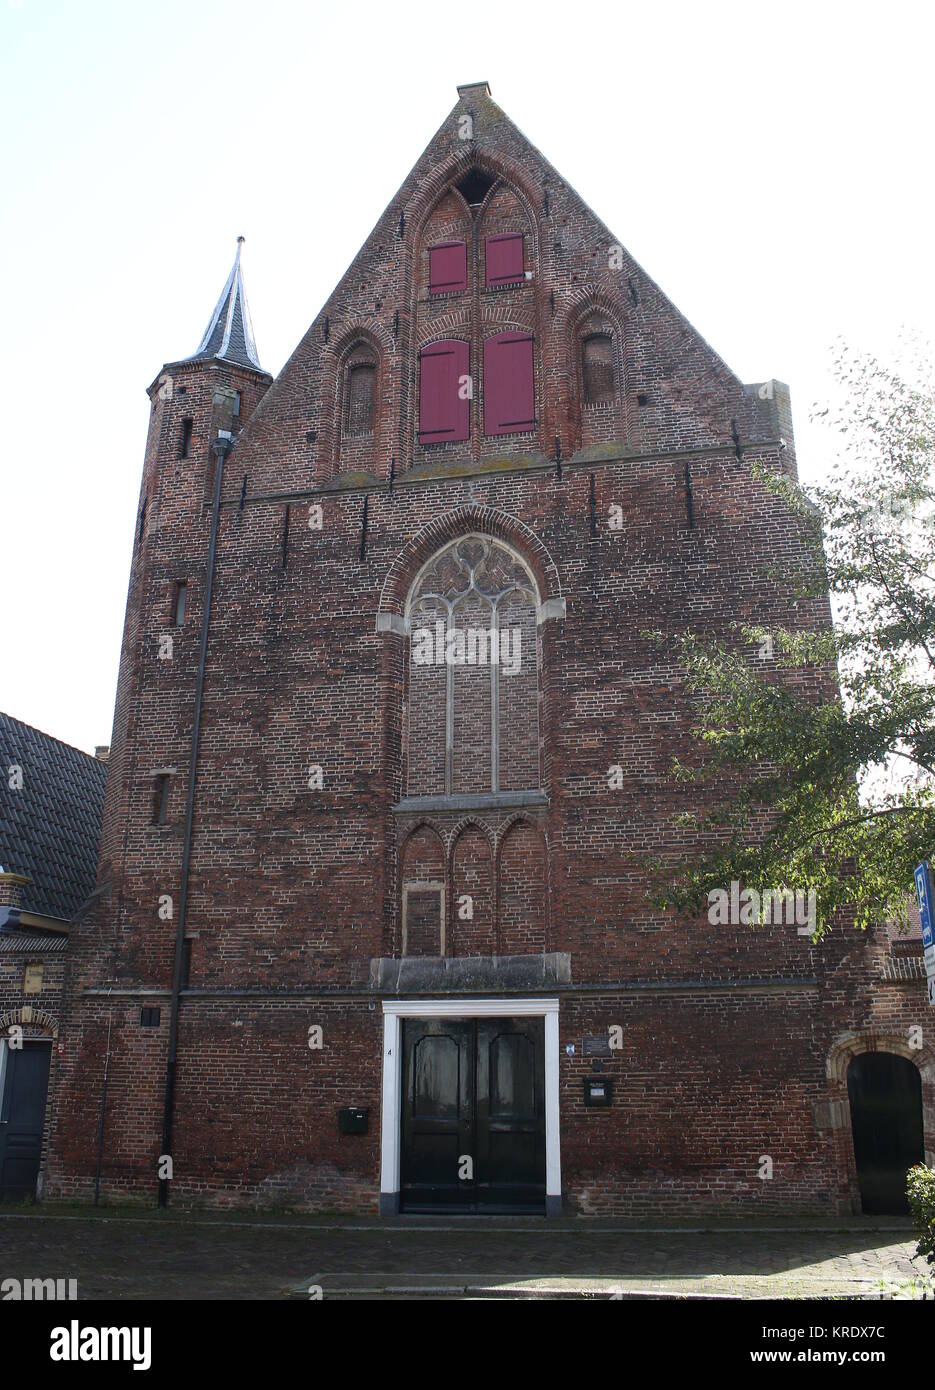 Waalse kerk (Walloon church,  Eglise Wallonne),  Calvinist church in Zwolle, The Netherlands at Schoutenstraat. Church building dates from 1500. Stock Photo